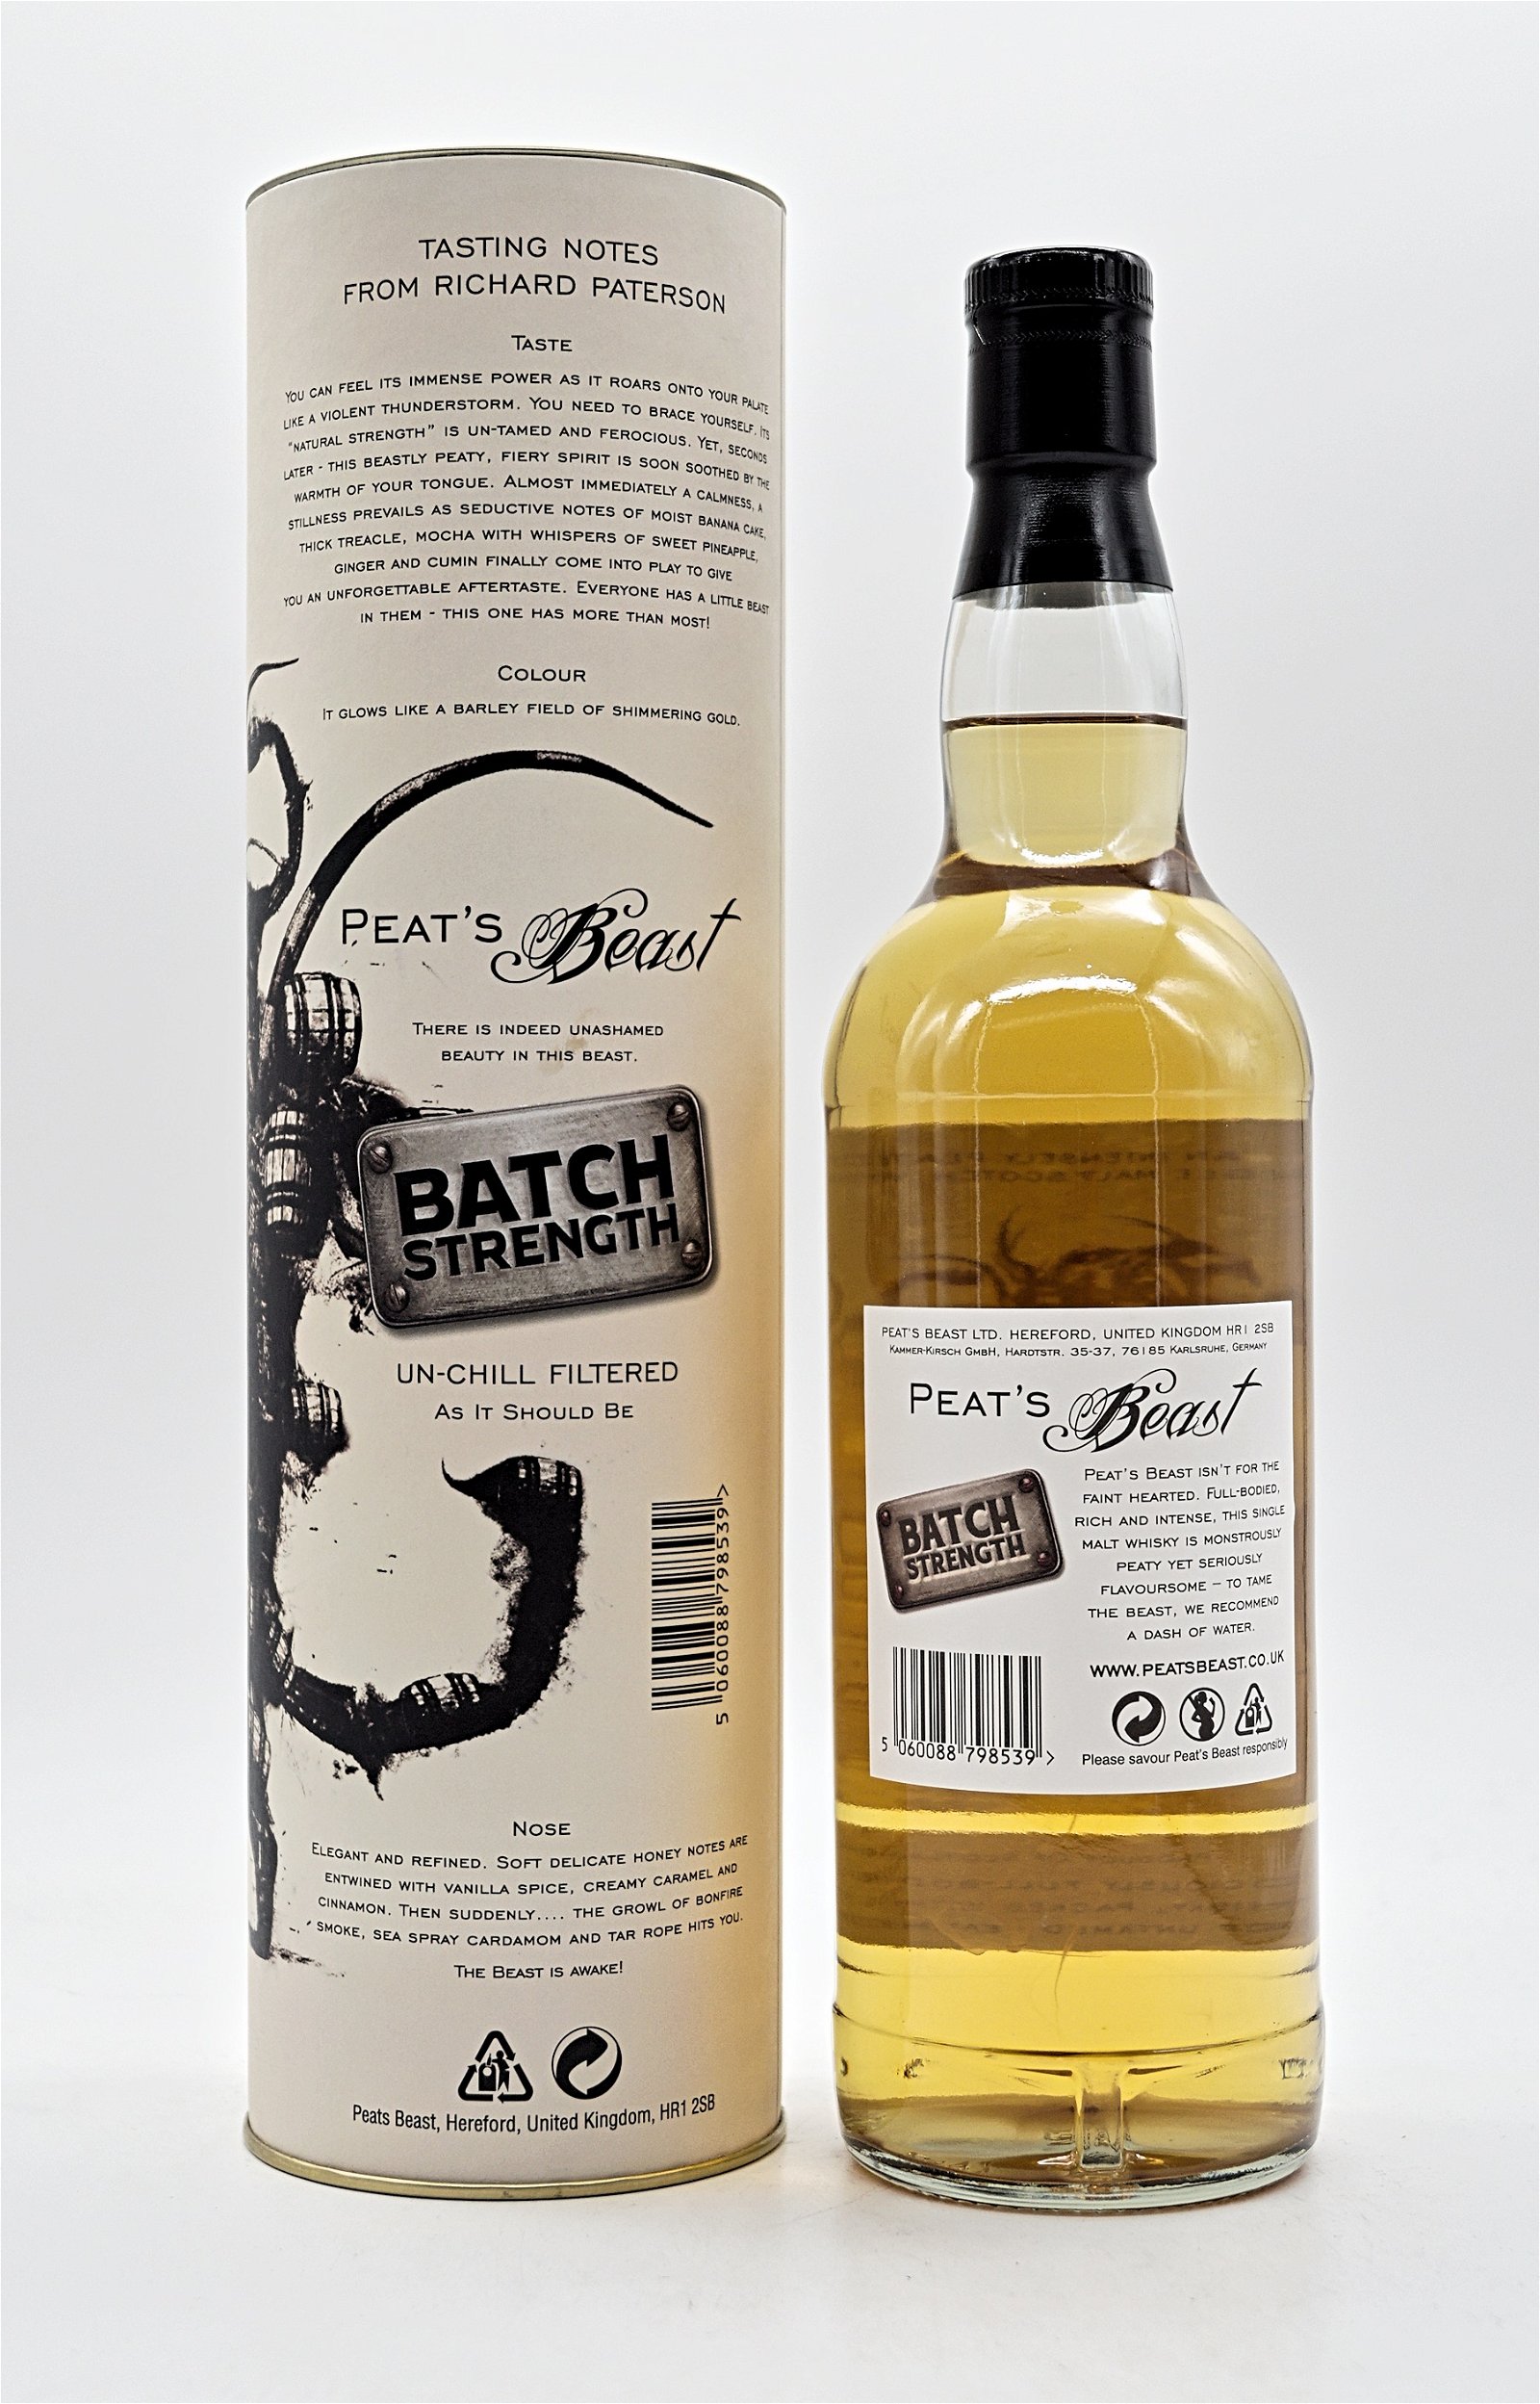 Peats Beast Intensely Peated Batch Strength Single Malt Scotch Whisky